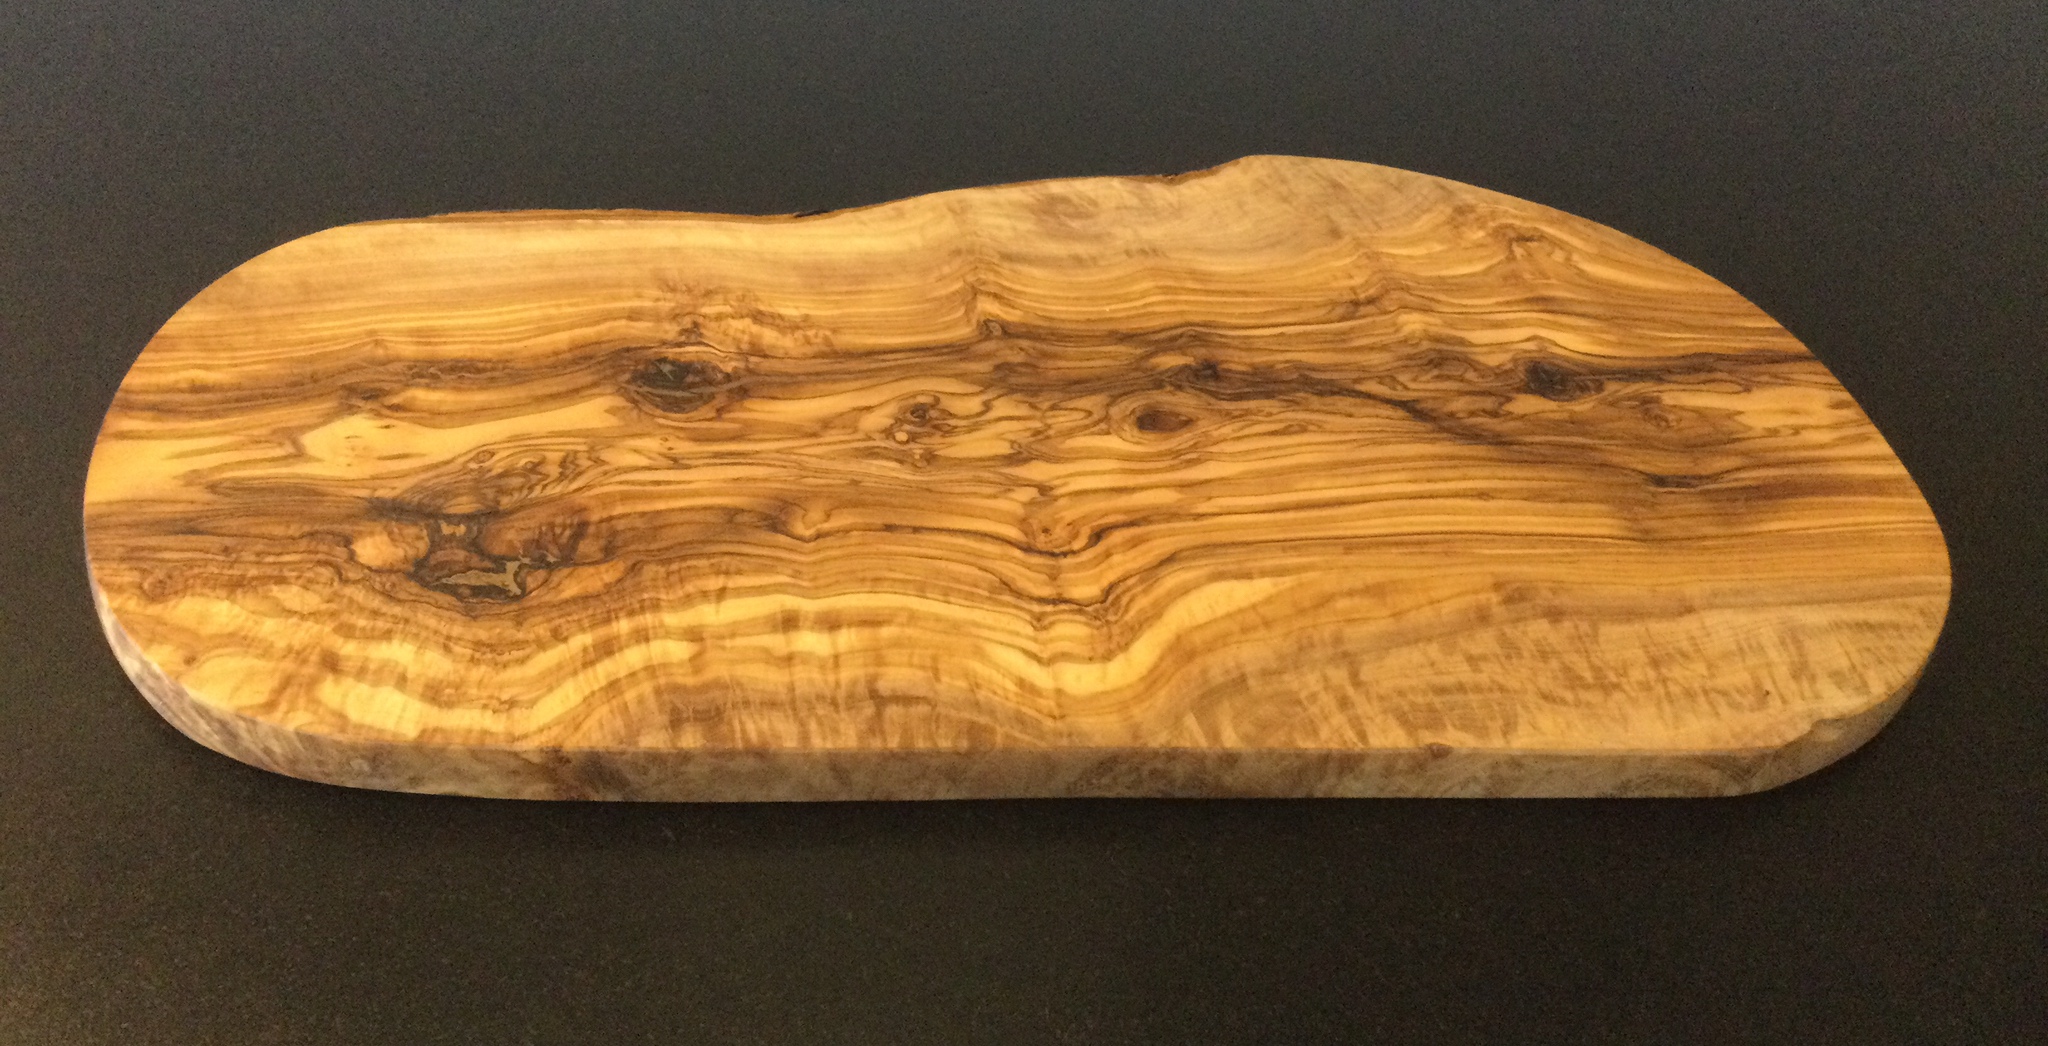 Olive wood: Oval serving board.